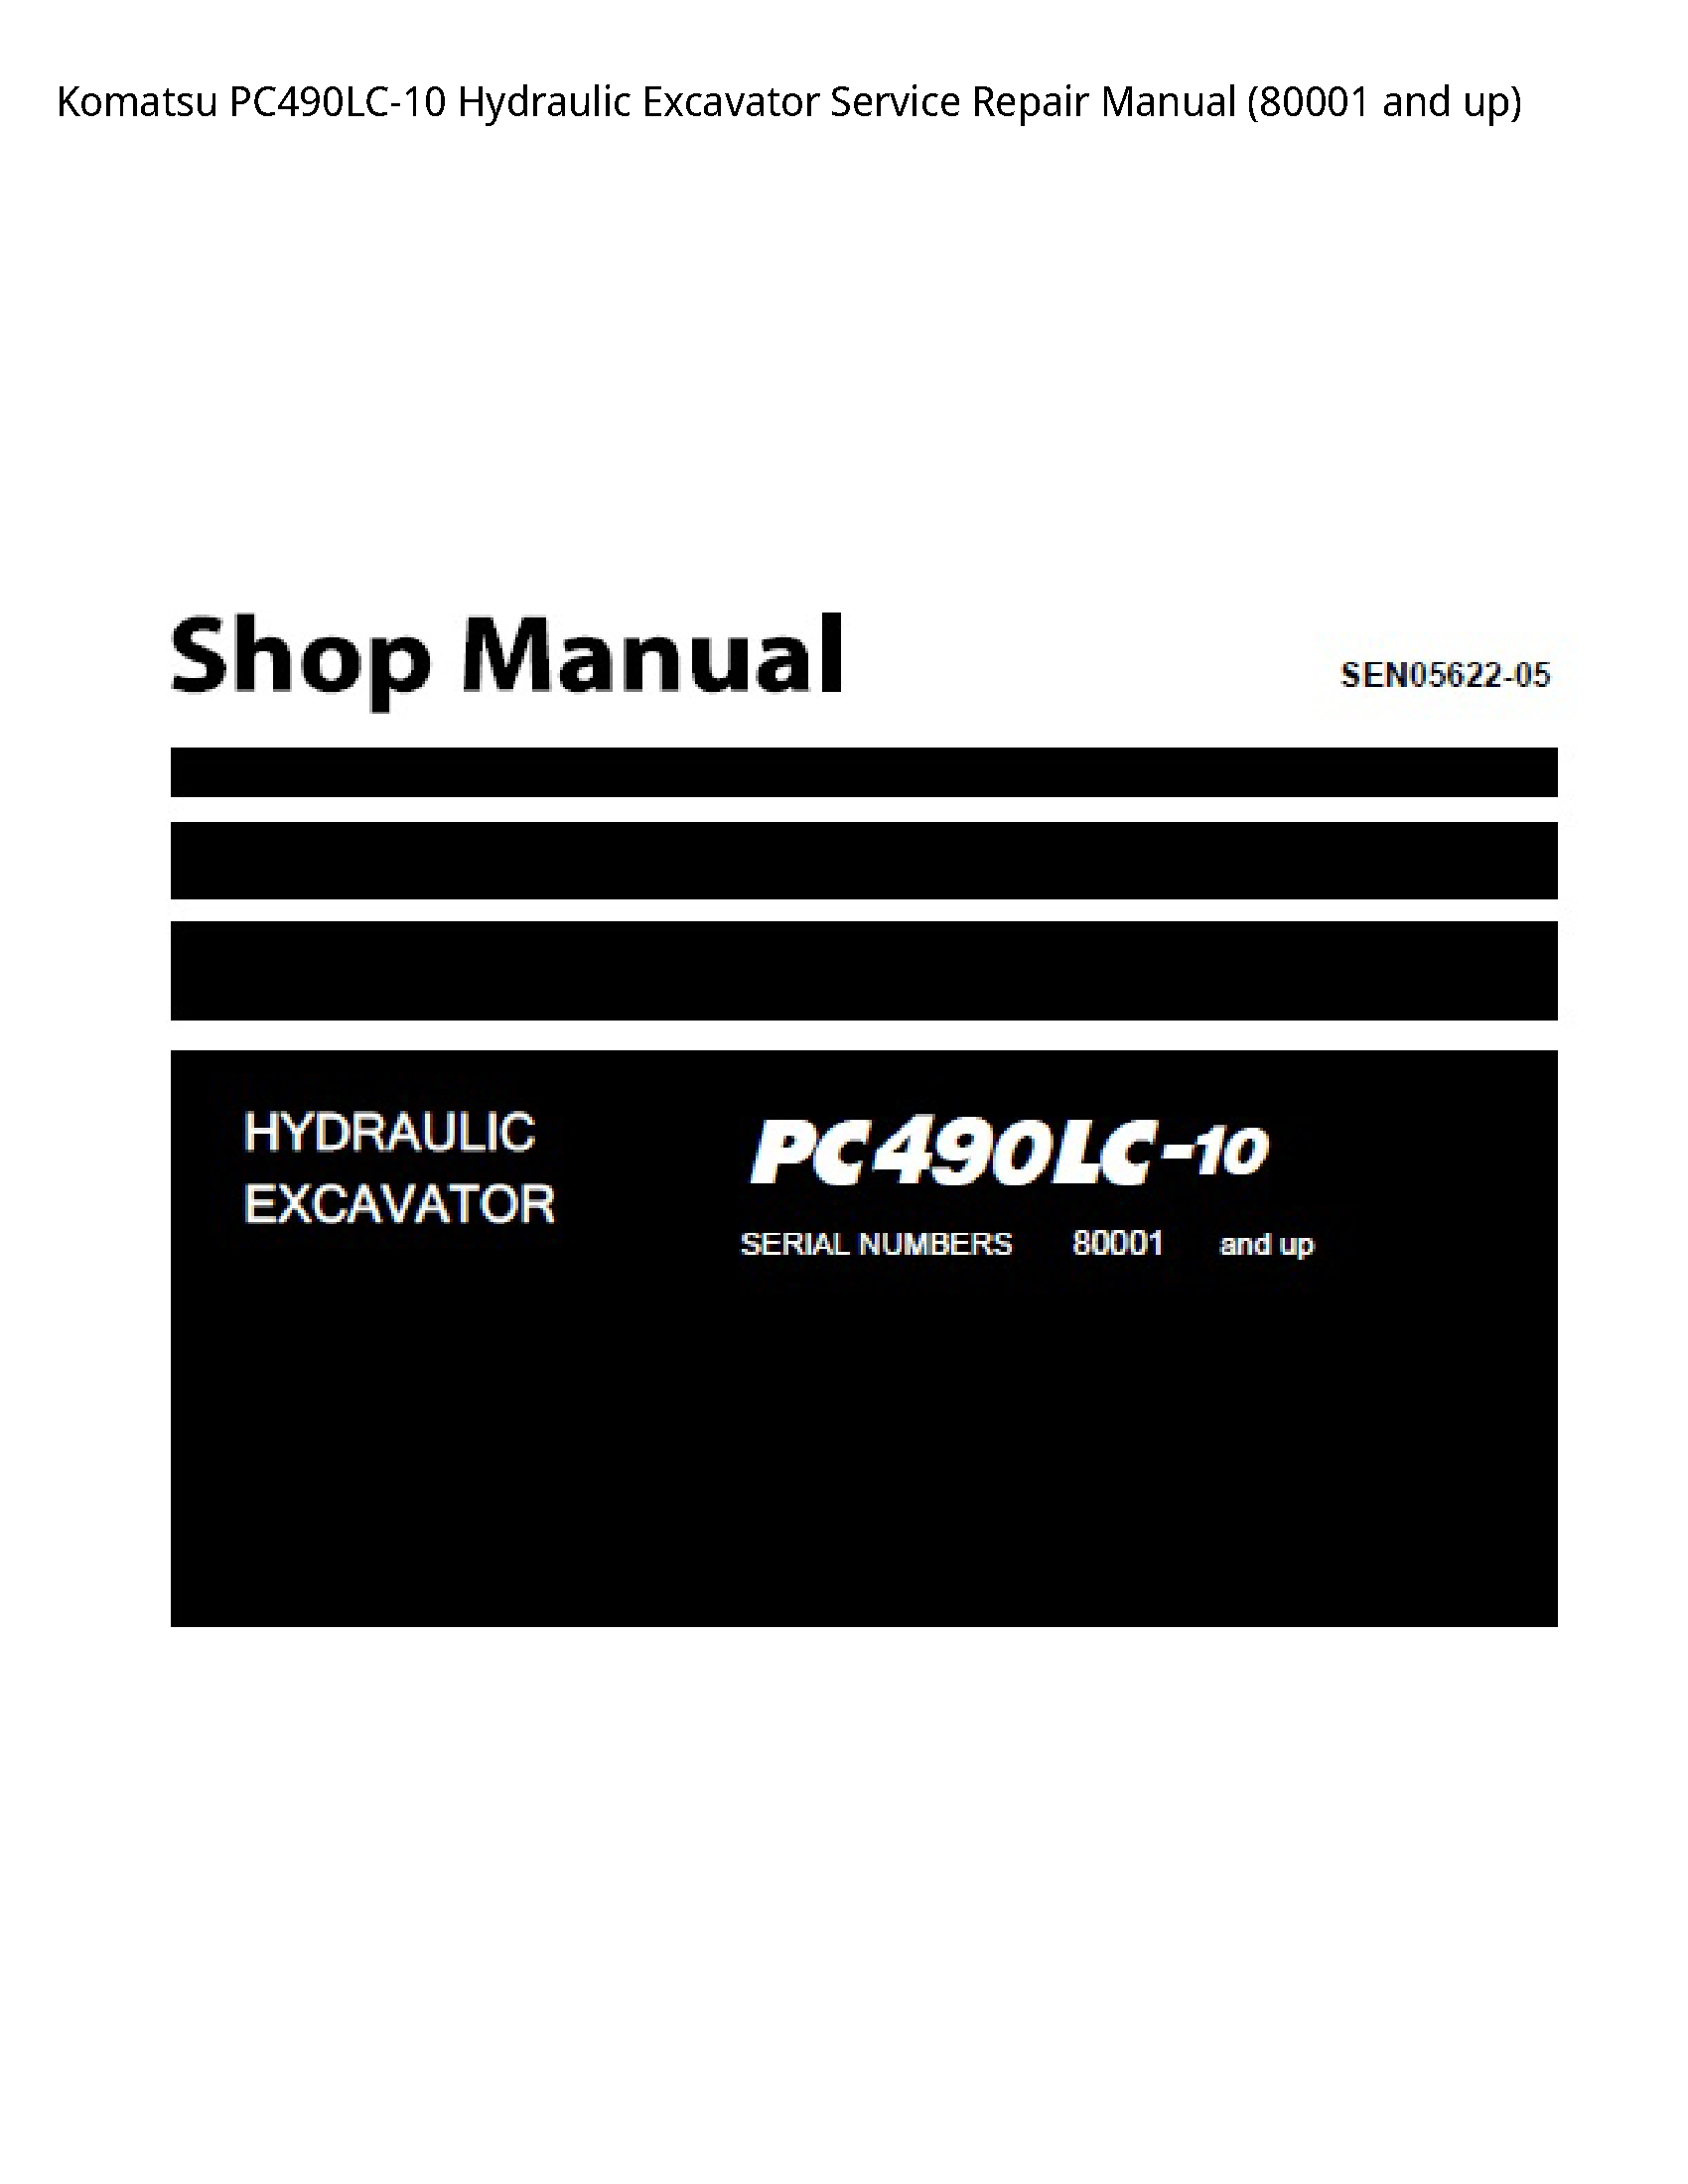 KOMATSU PC490LC-10 Hydraulic Excavator manual